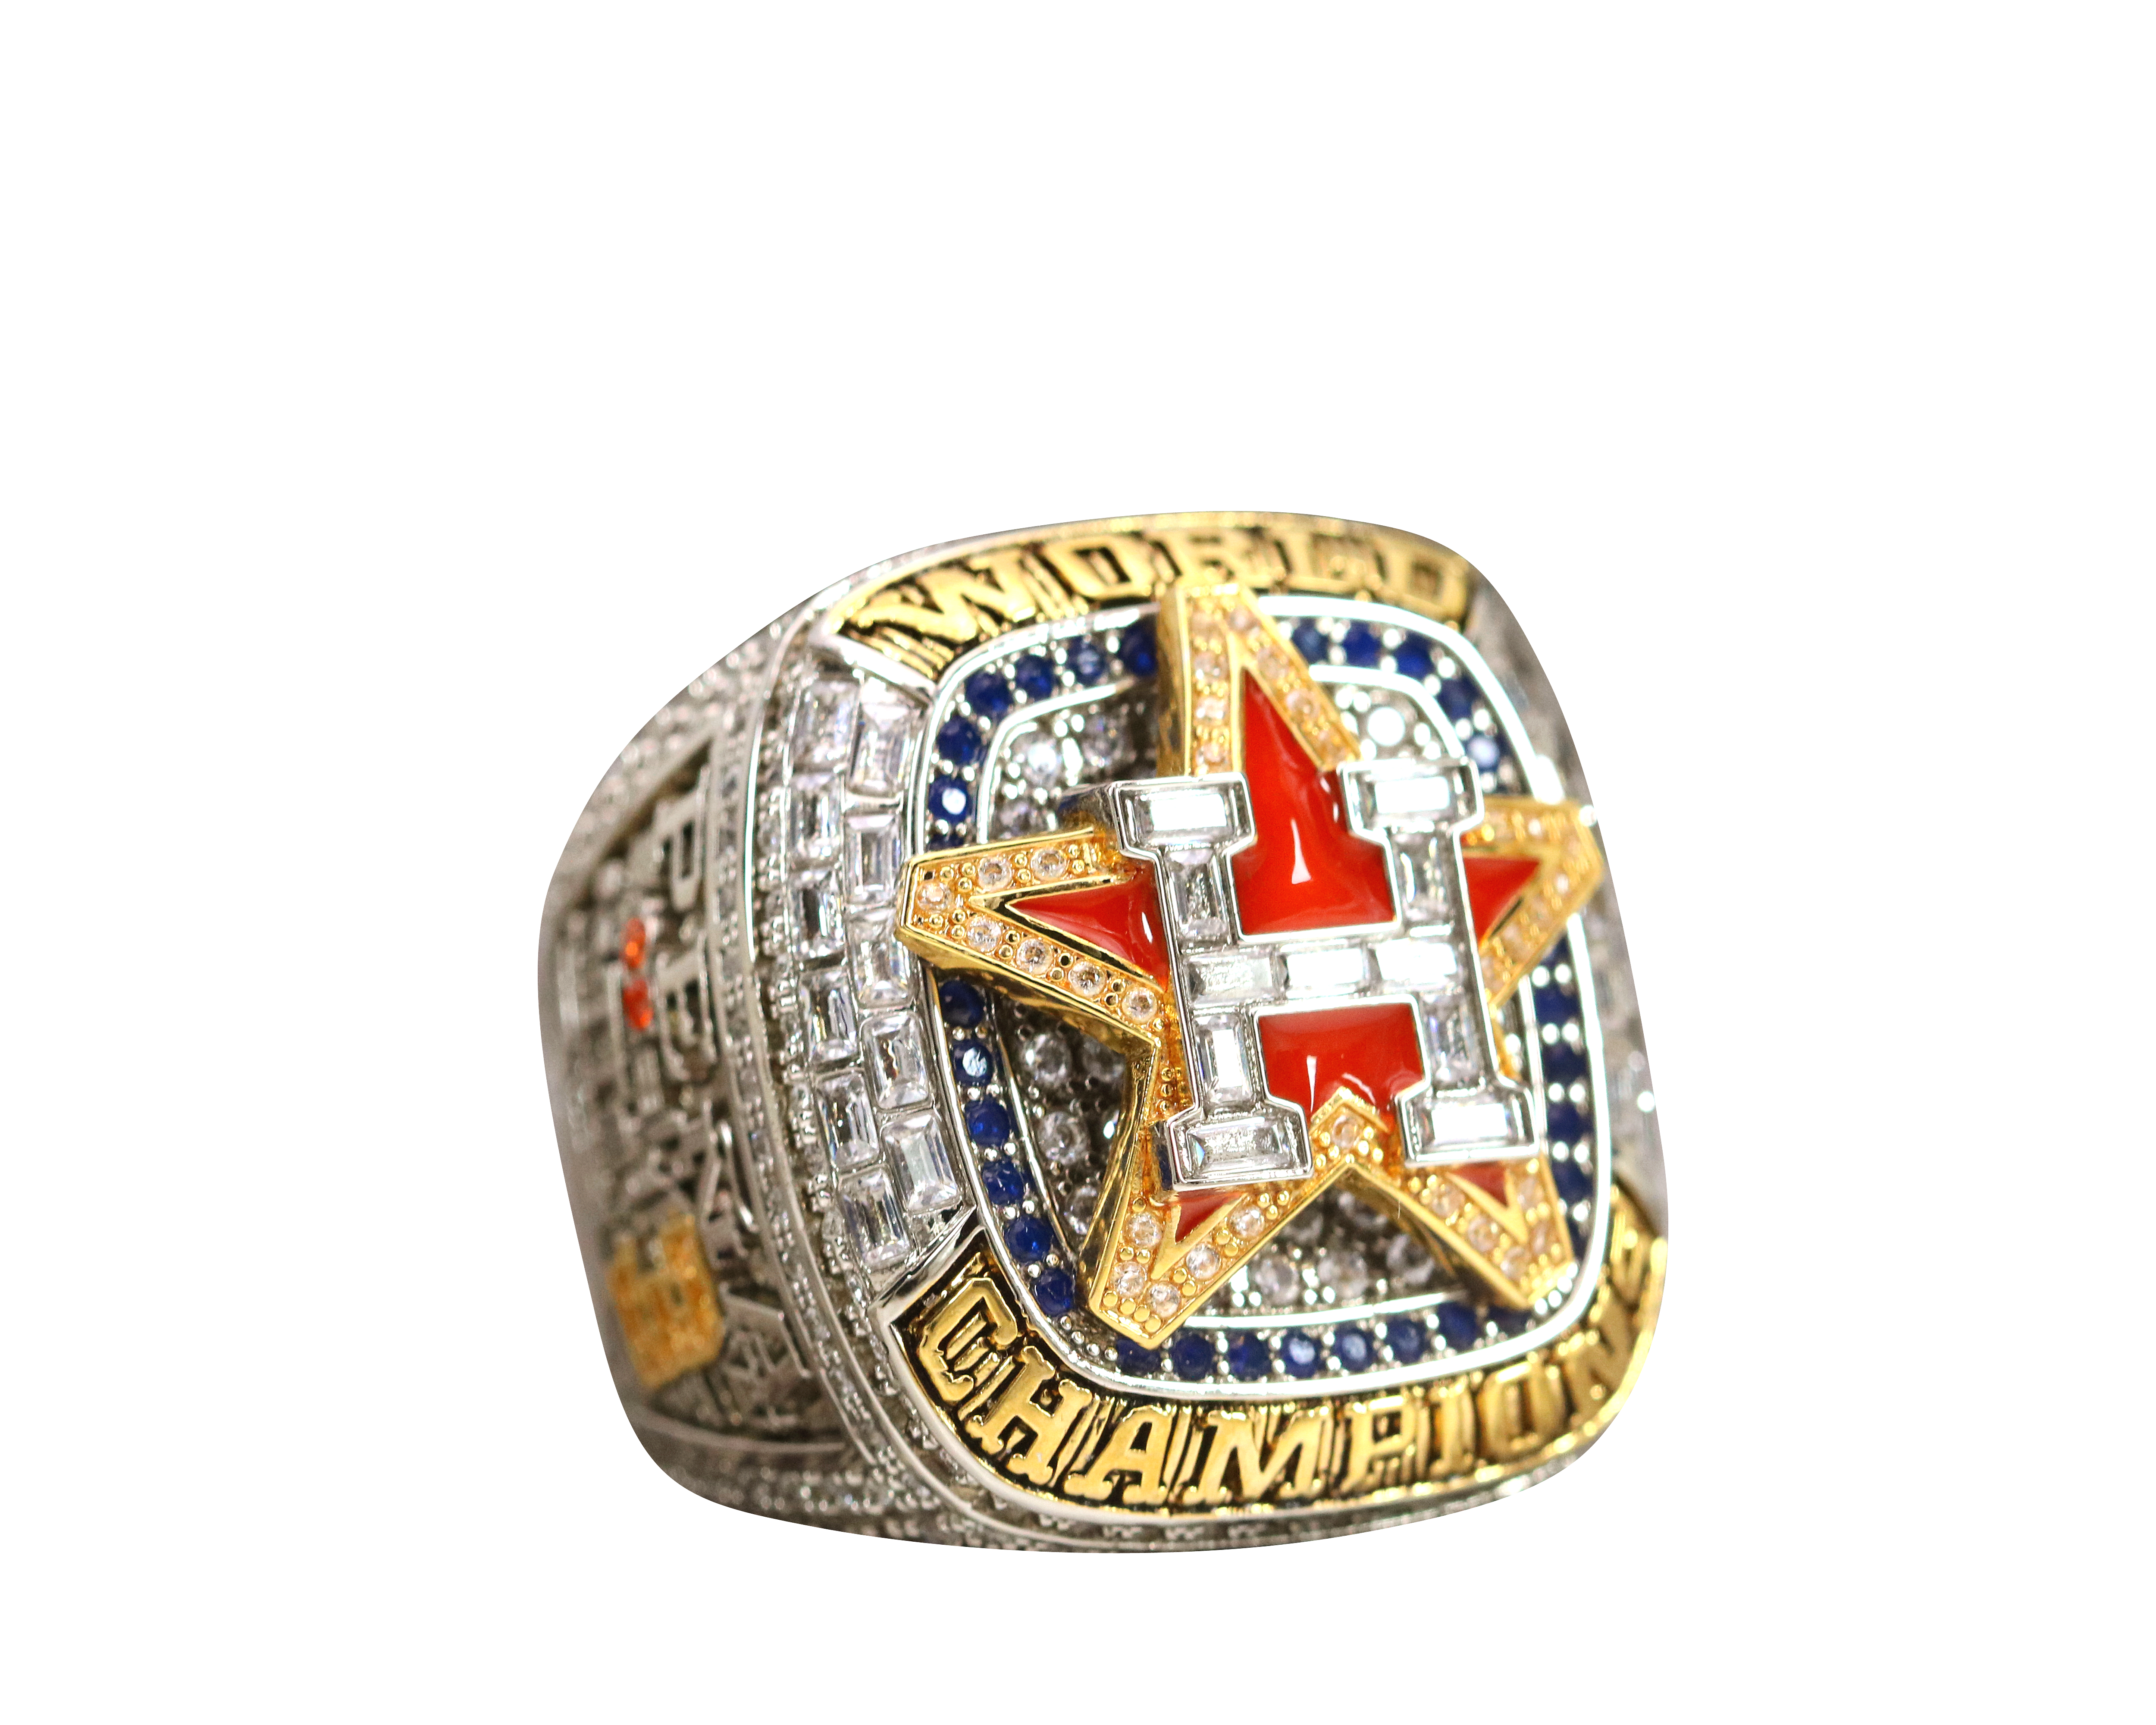 Houston Astros World Series Championship Pendant/Necklace (2022